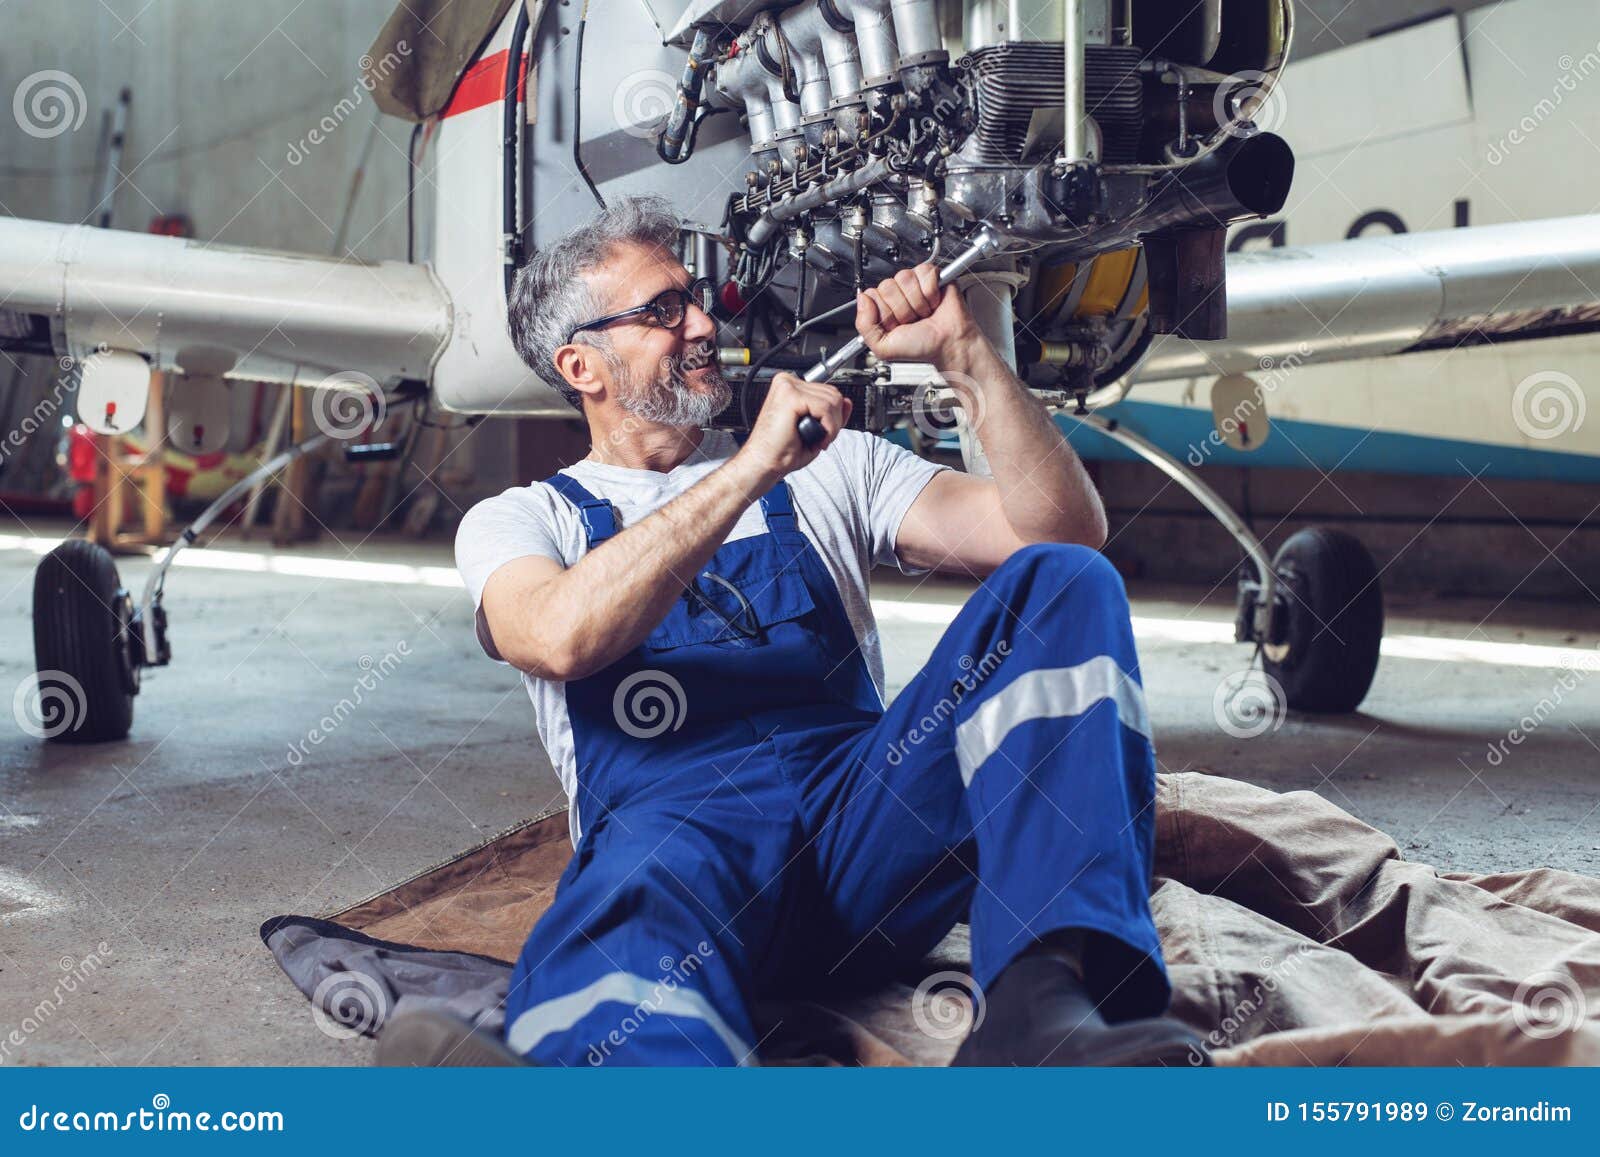 Aircraft Mechanic Repairs An Aircraft Engine In An Airport Hangar Stock Image Image Of Engine Aero